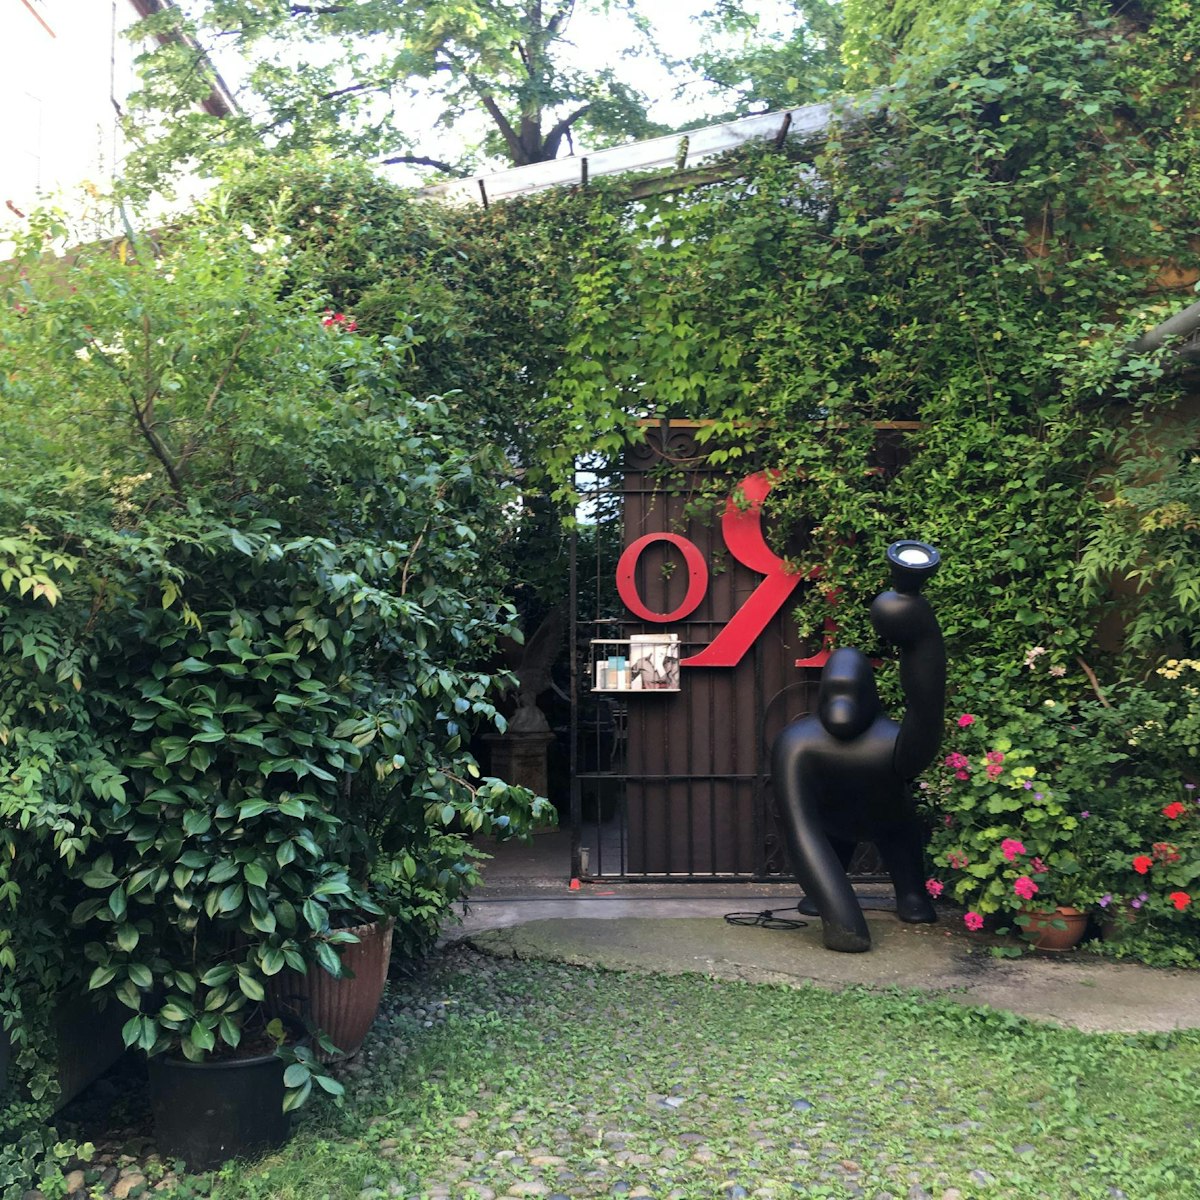 Spazio Rossana Orlandi courtyard entrance